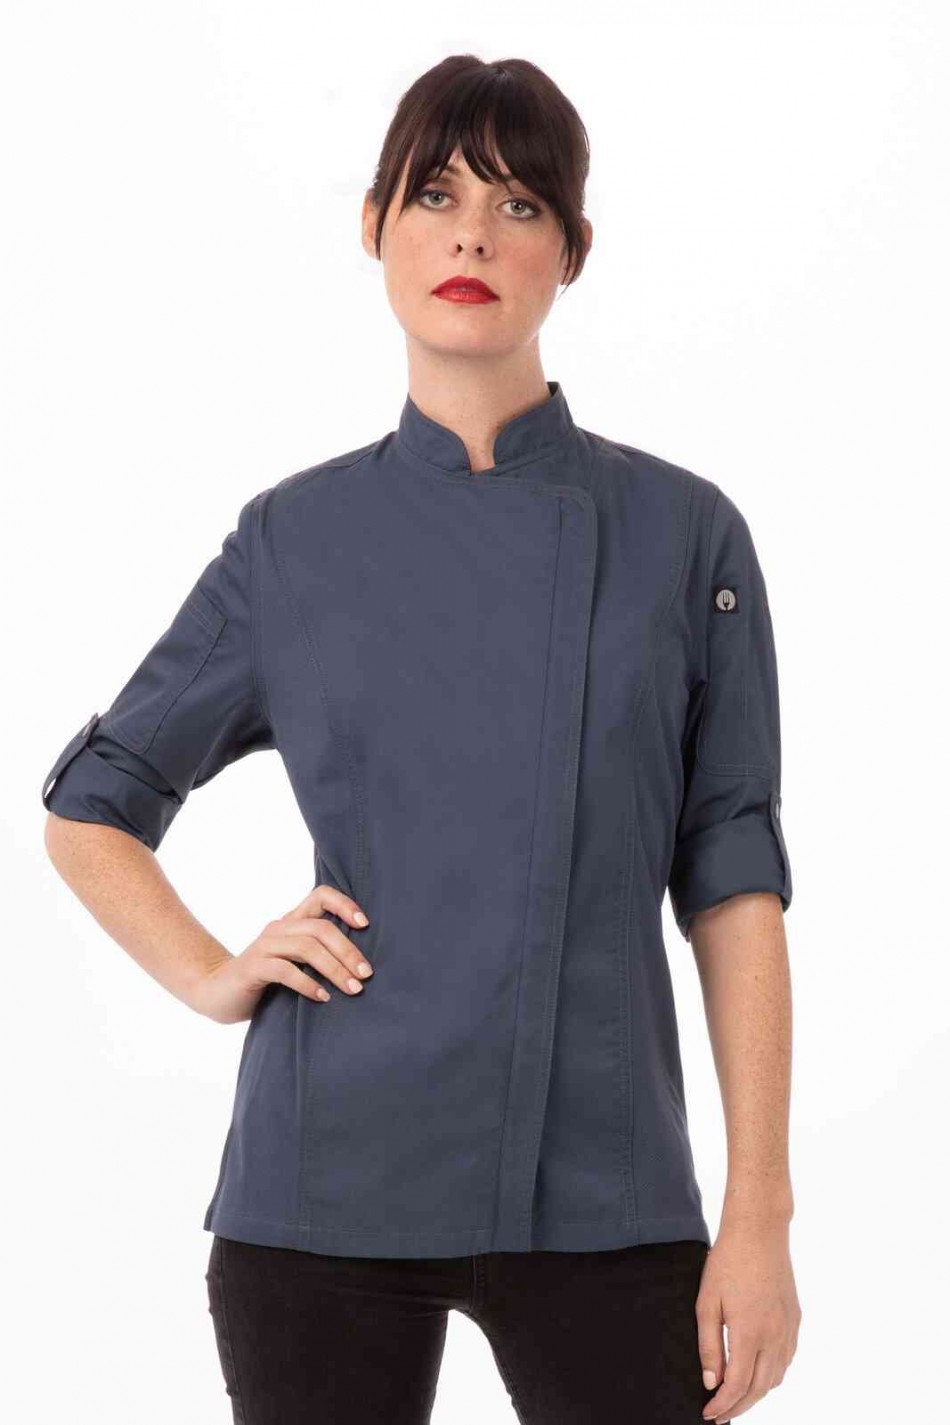 Blue Hartford Womens Zipper Chef Jacket by Chef Works